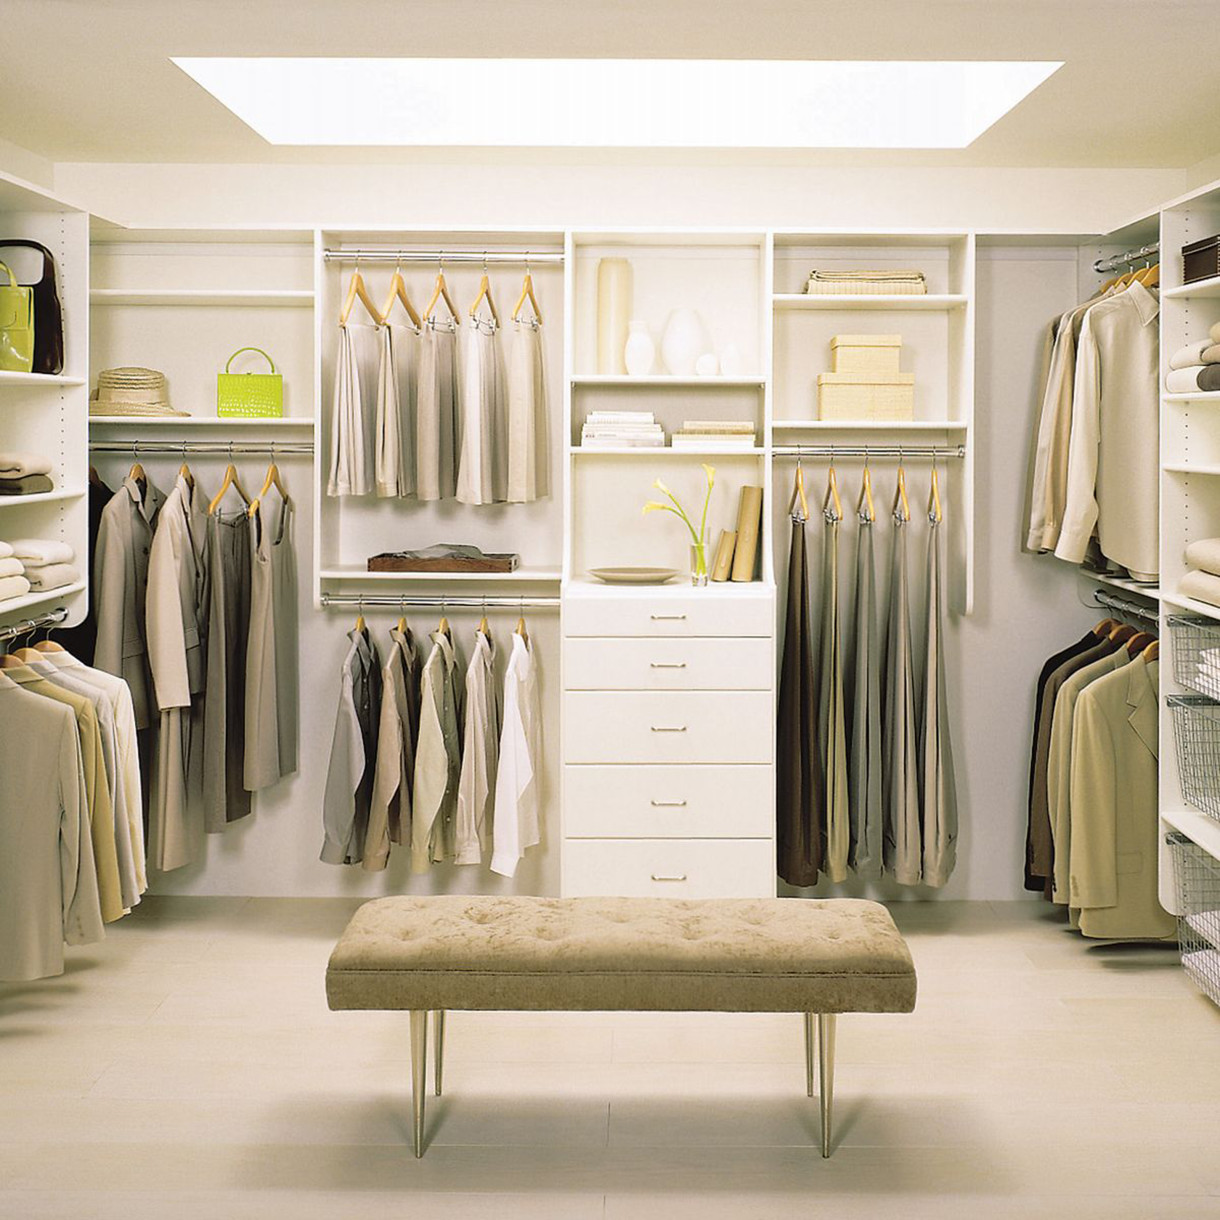 Дизайн гардеробной комнаты на чердаке